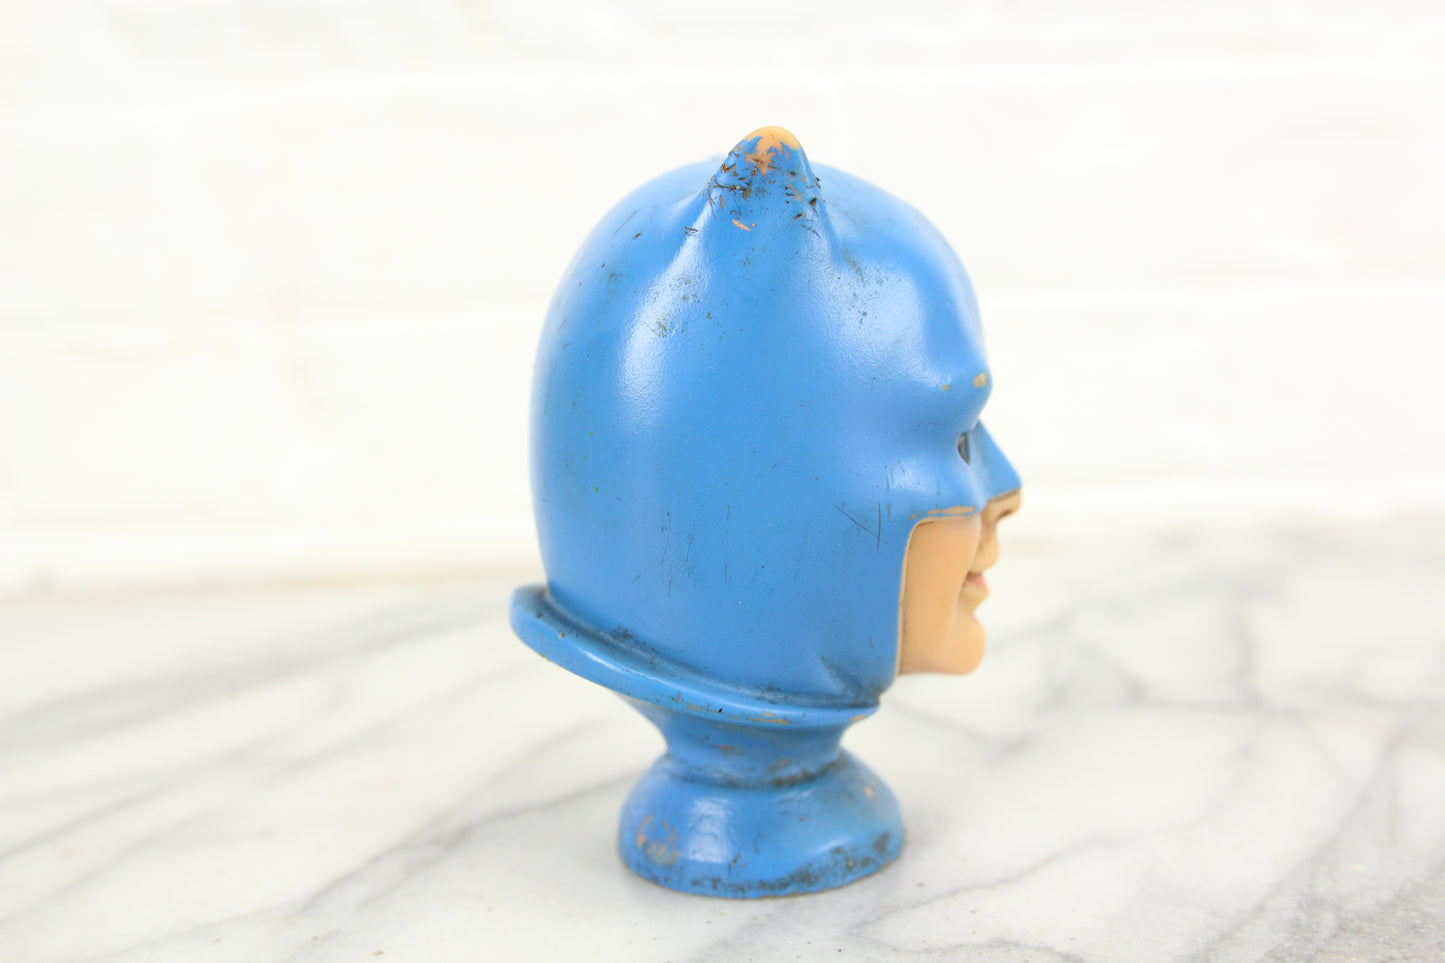 Vinyl Batman Puppet Head, Copyright 1966 by Ideal Toy Corporation